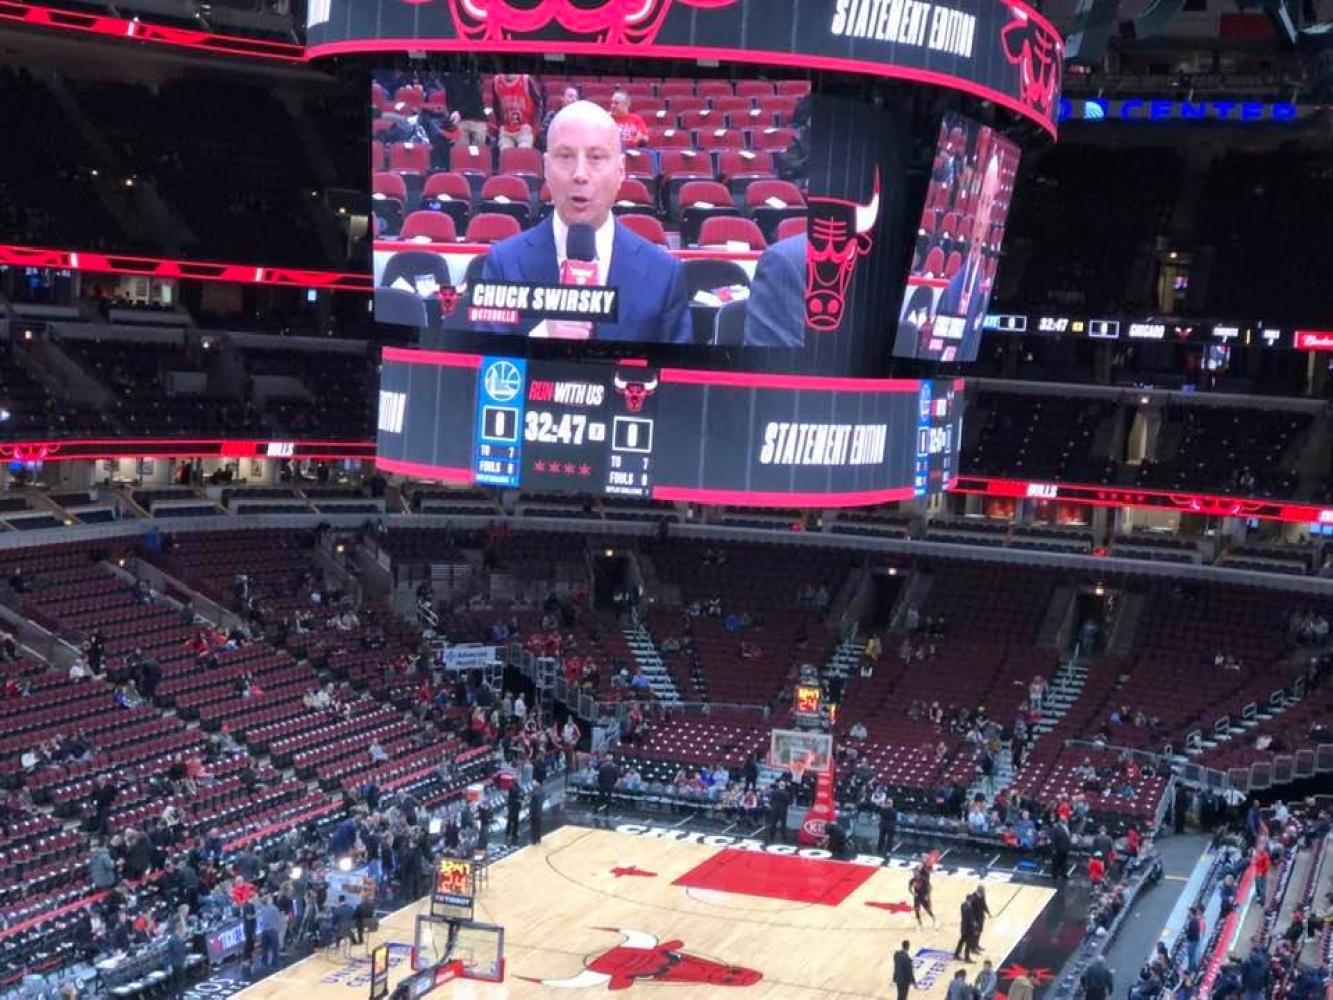 Chuck Swirskey displayed on the Chicago Bulls' media screen.